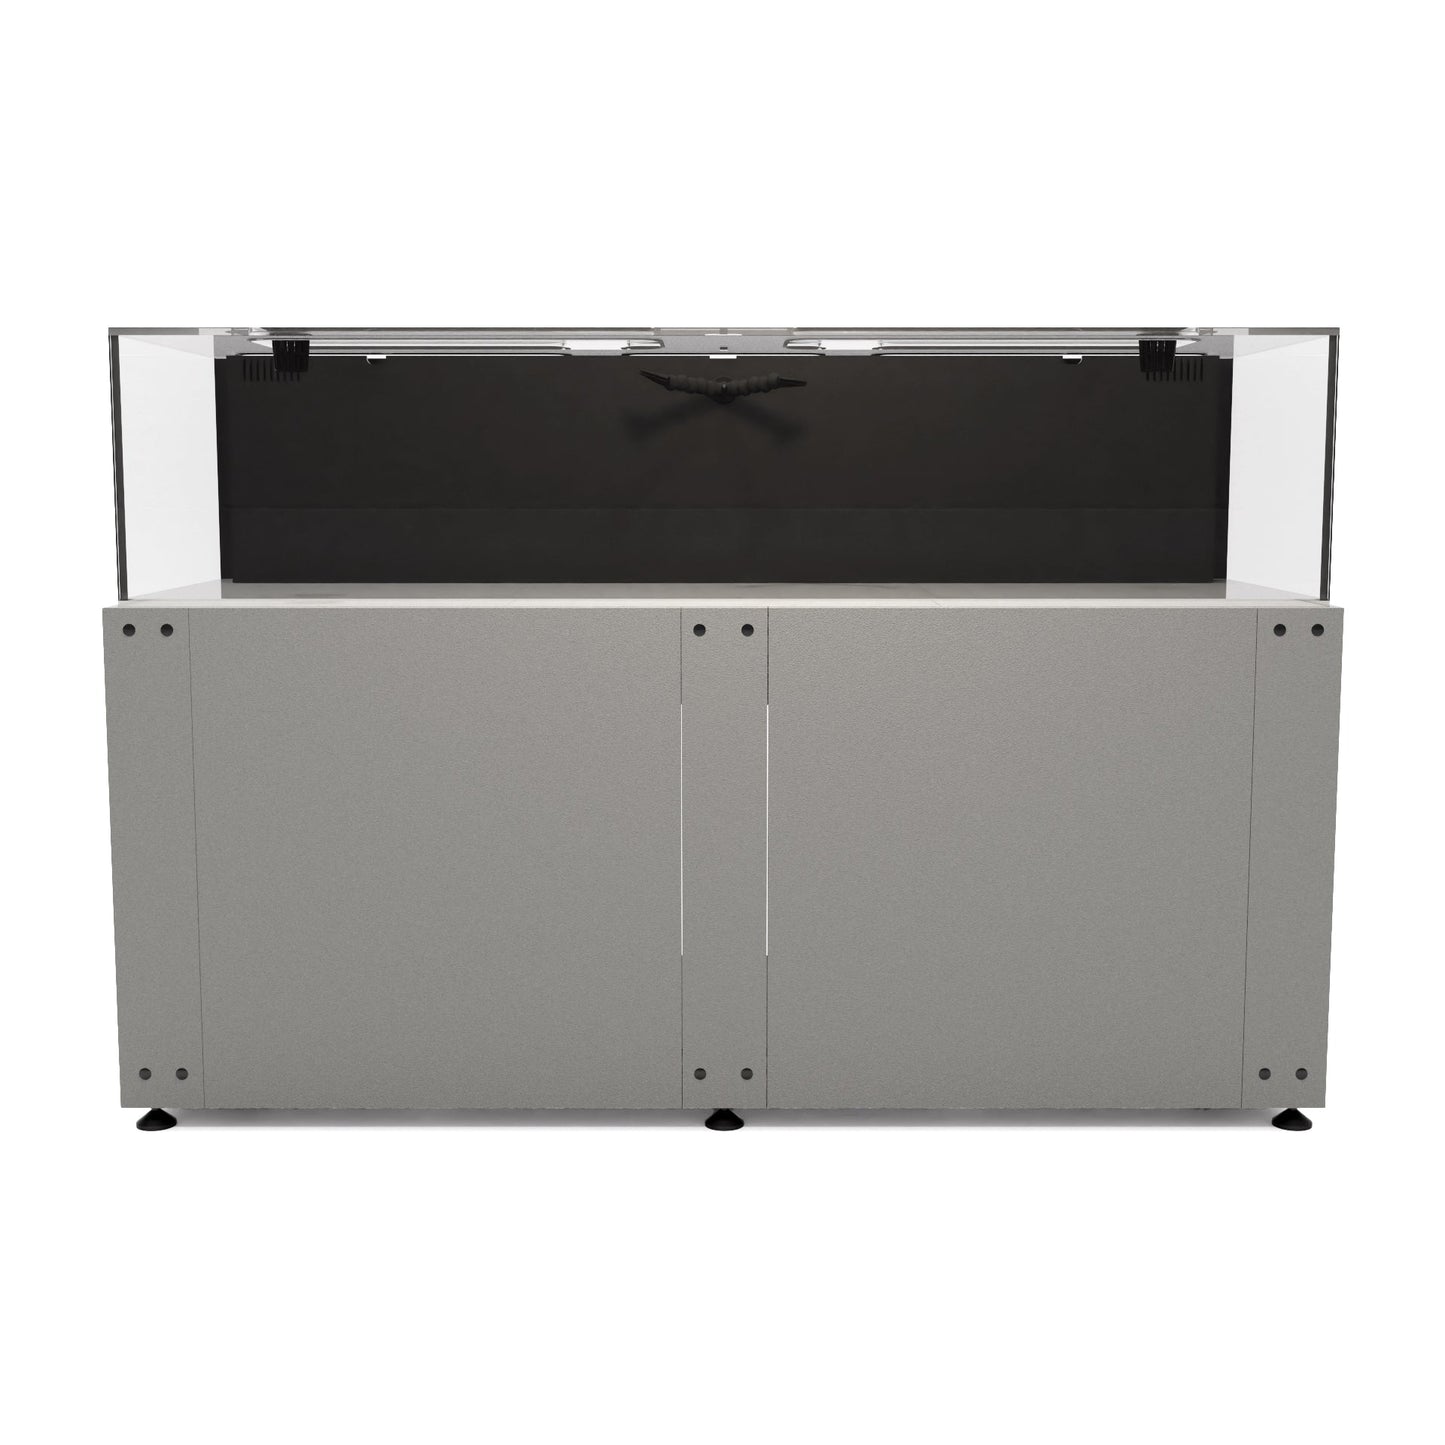 Tenecor Advantage® 160 Wet/Dry AIO Aquarium and Aluminum Stand Bundle 96x24x16